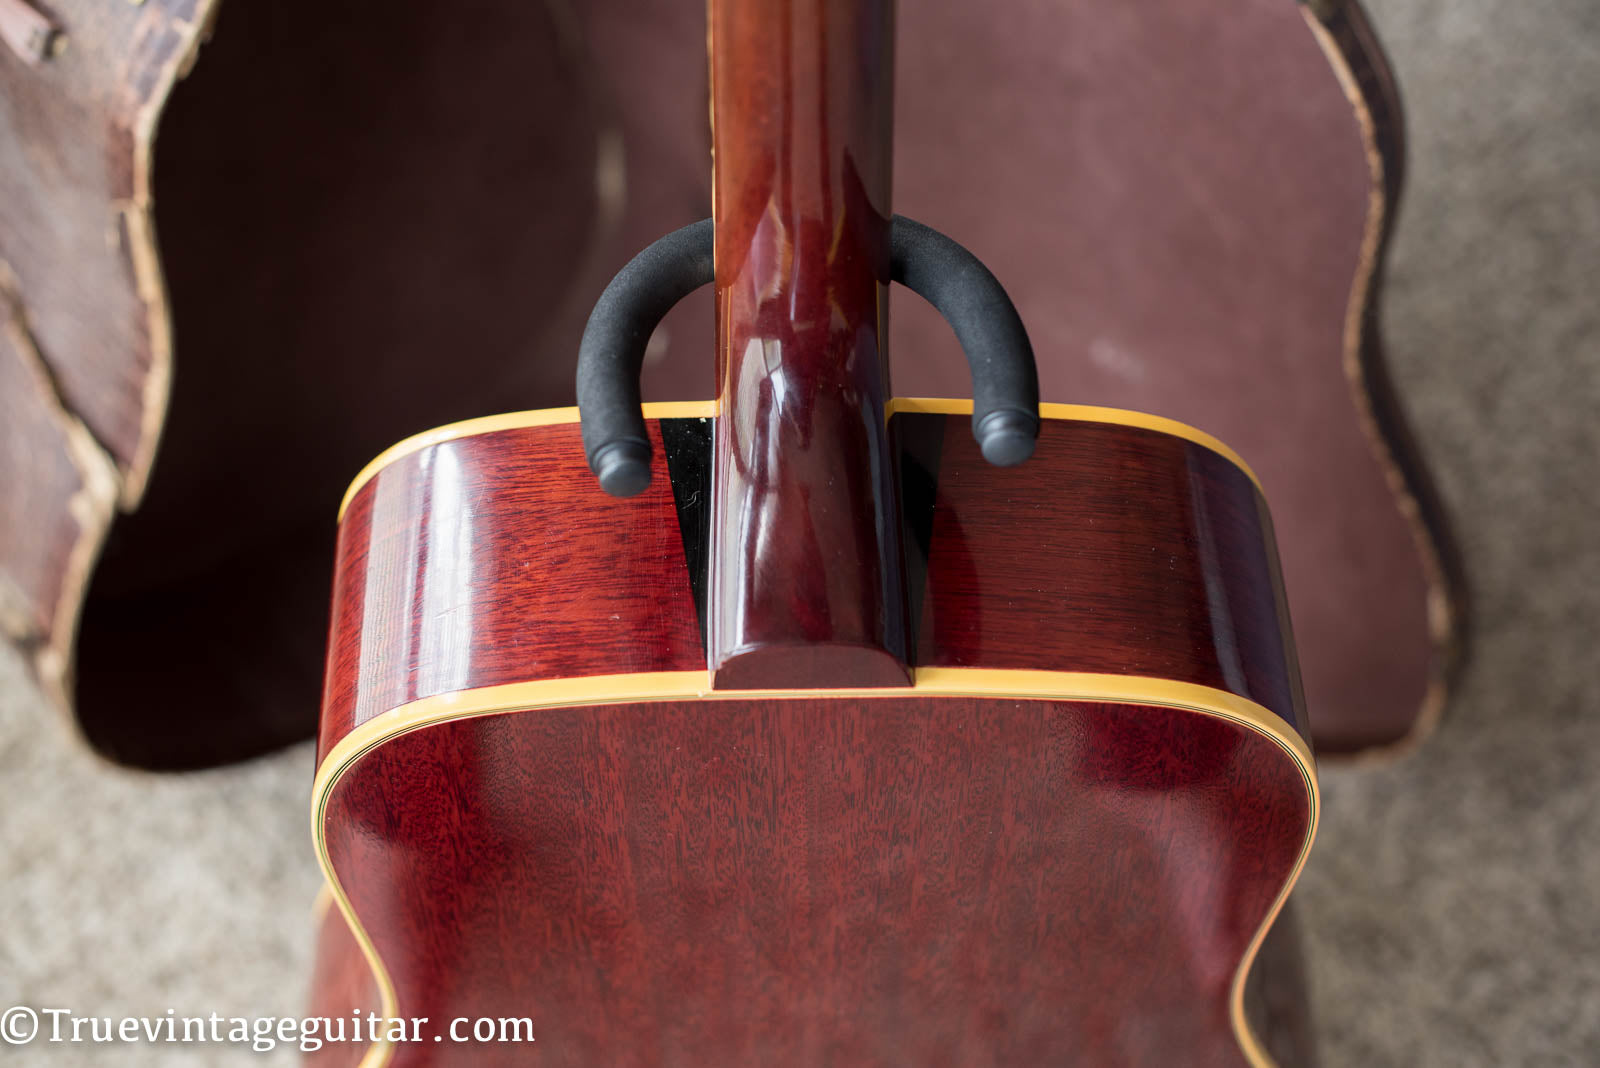 rim stinger, neck heel stinger, 1965 Epiphone El Dorado acoustic guitar